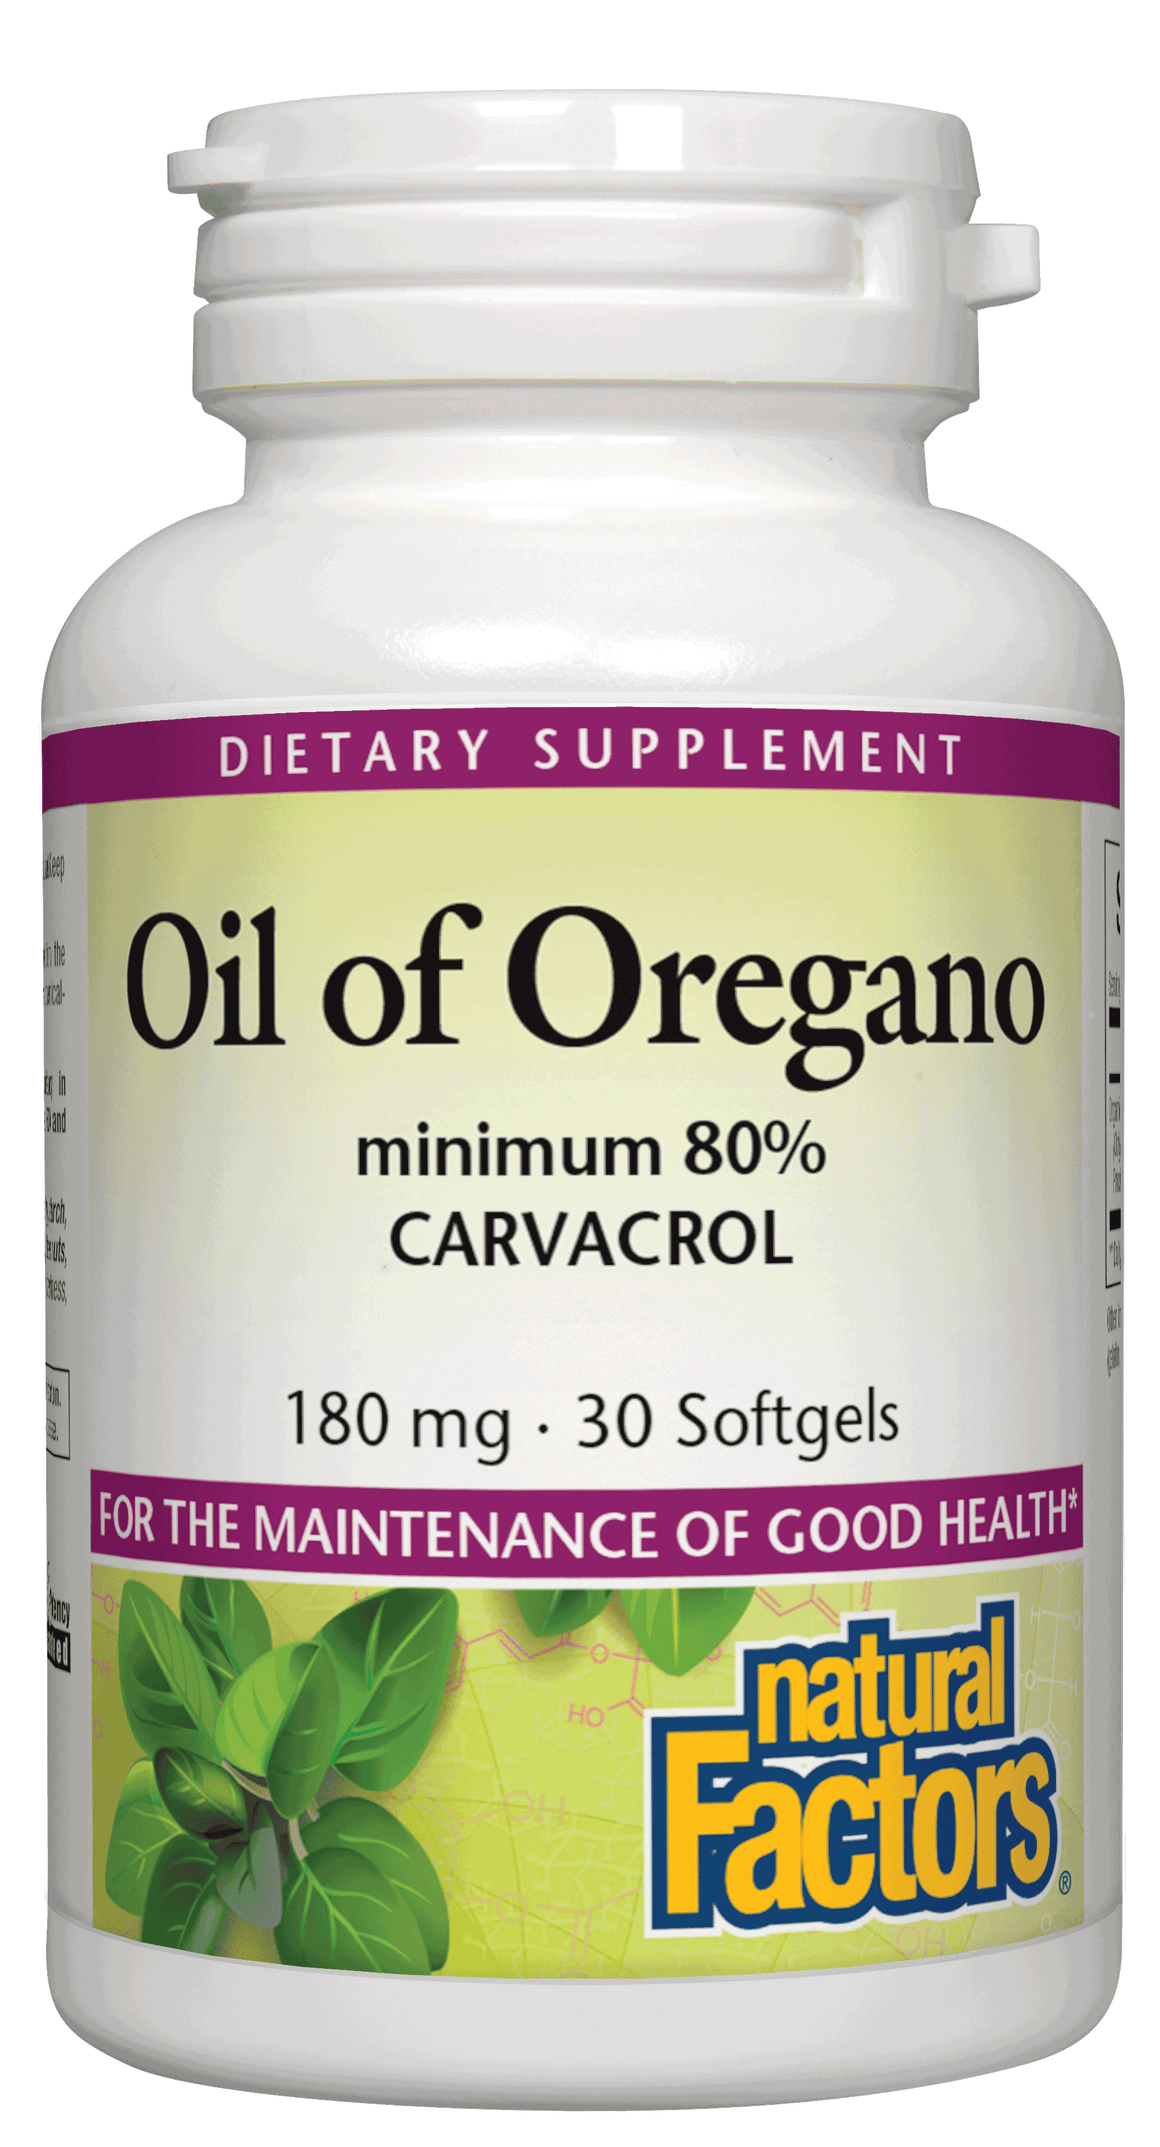 A bottle of Natural Factors Oil of Oregano 180 mg